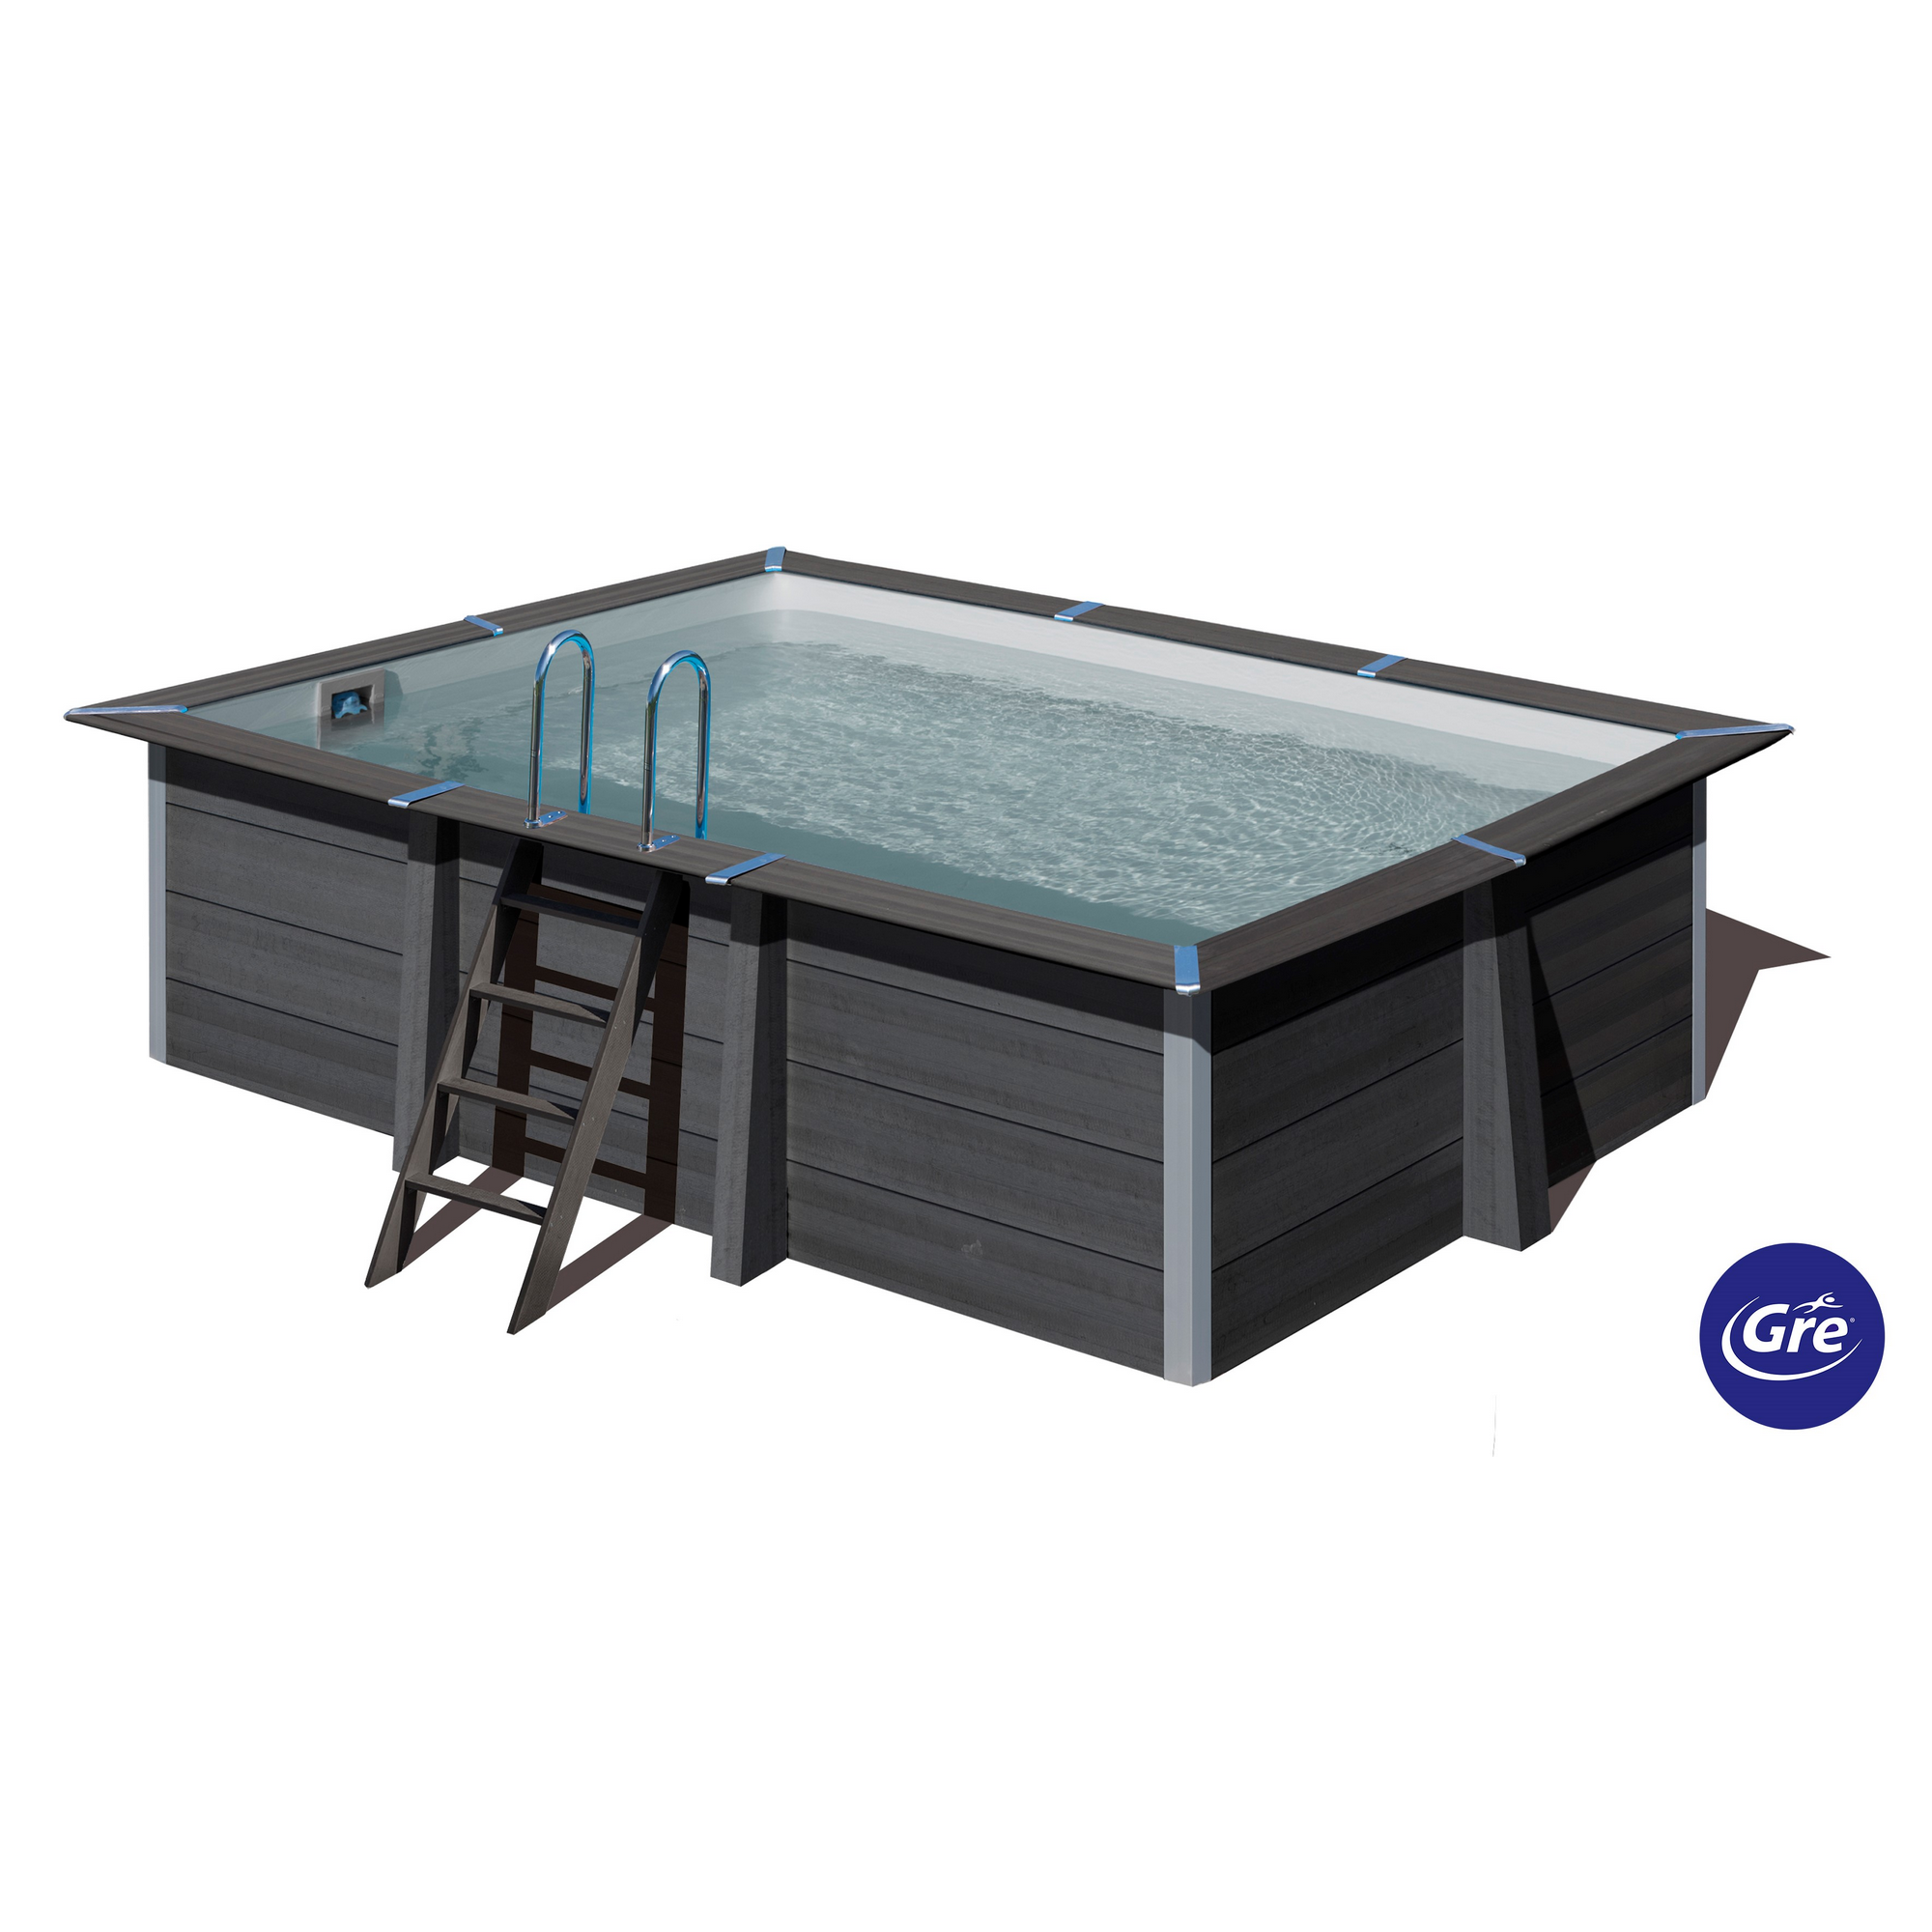 Composite Pool-Set 'Avantgarde' 326 x 124 x 466 cm mit Sandfilter und Trittleiter + product picture